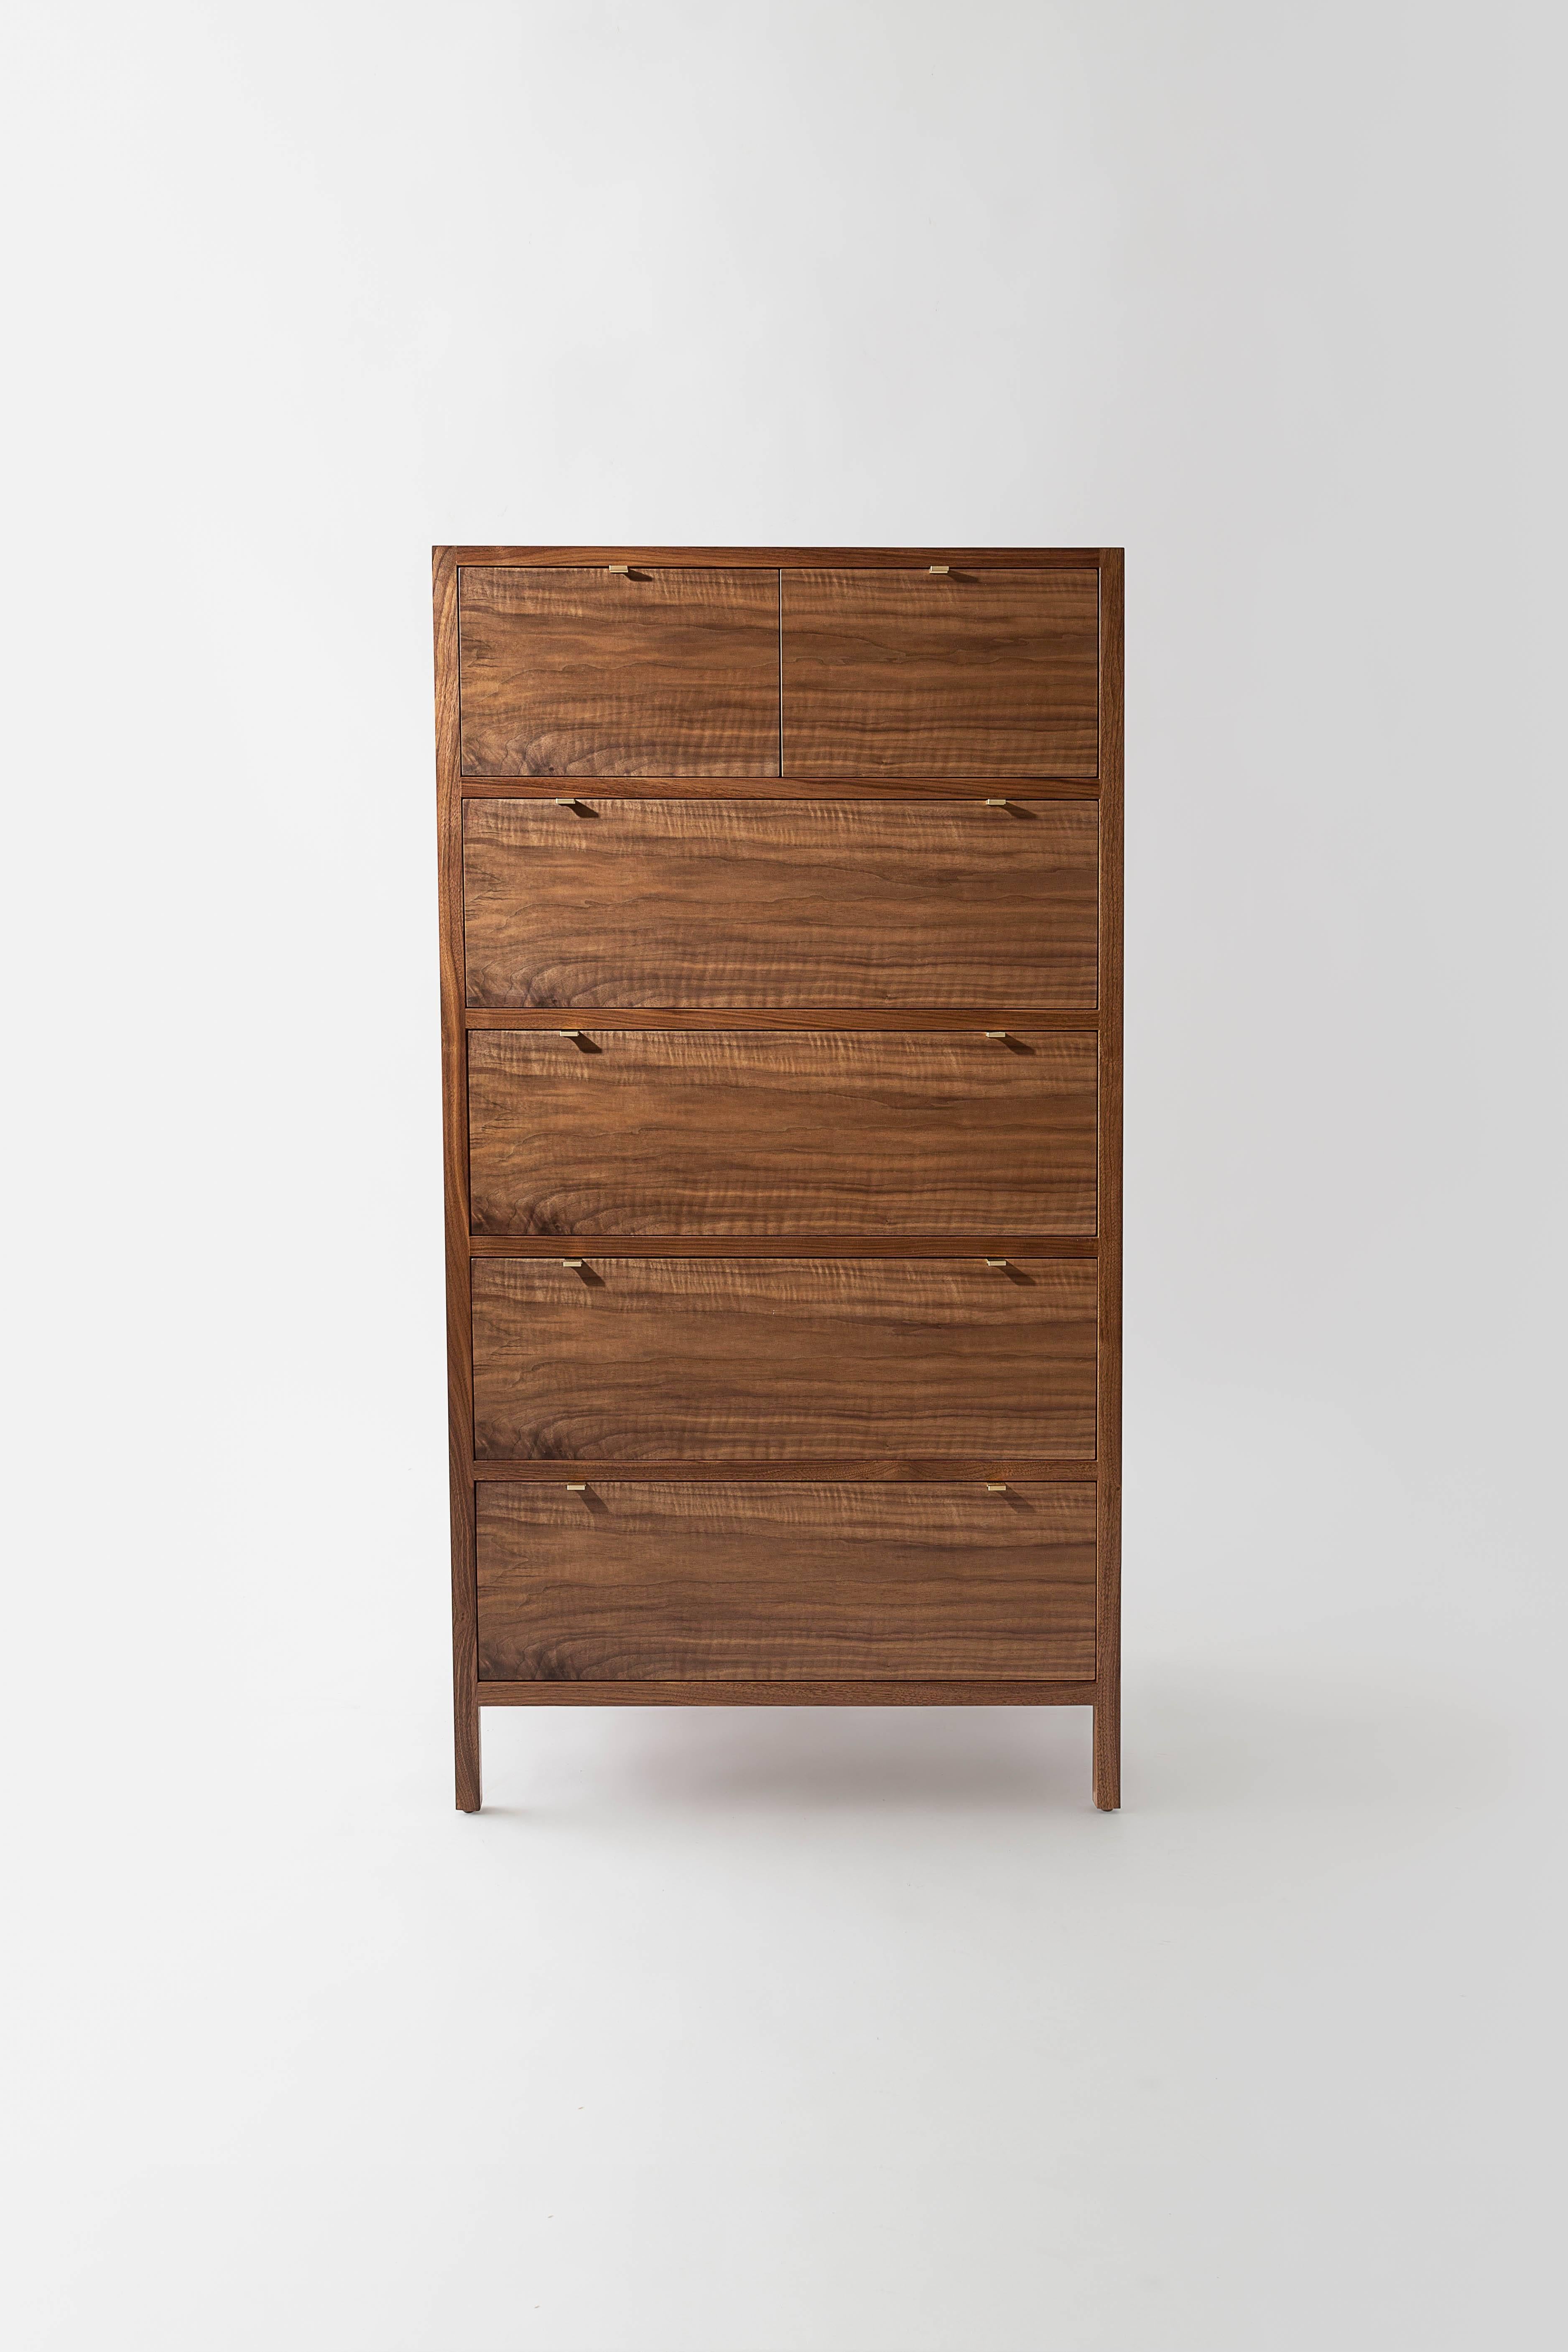 Laska Dresser, Figured Walnut, Six Drawers, Show Sample (Skandinavische Moderne)